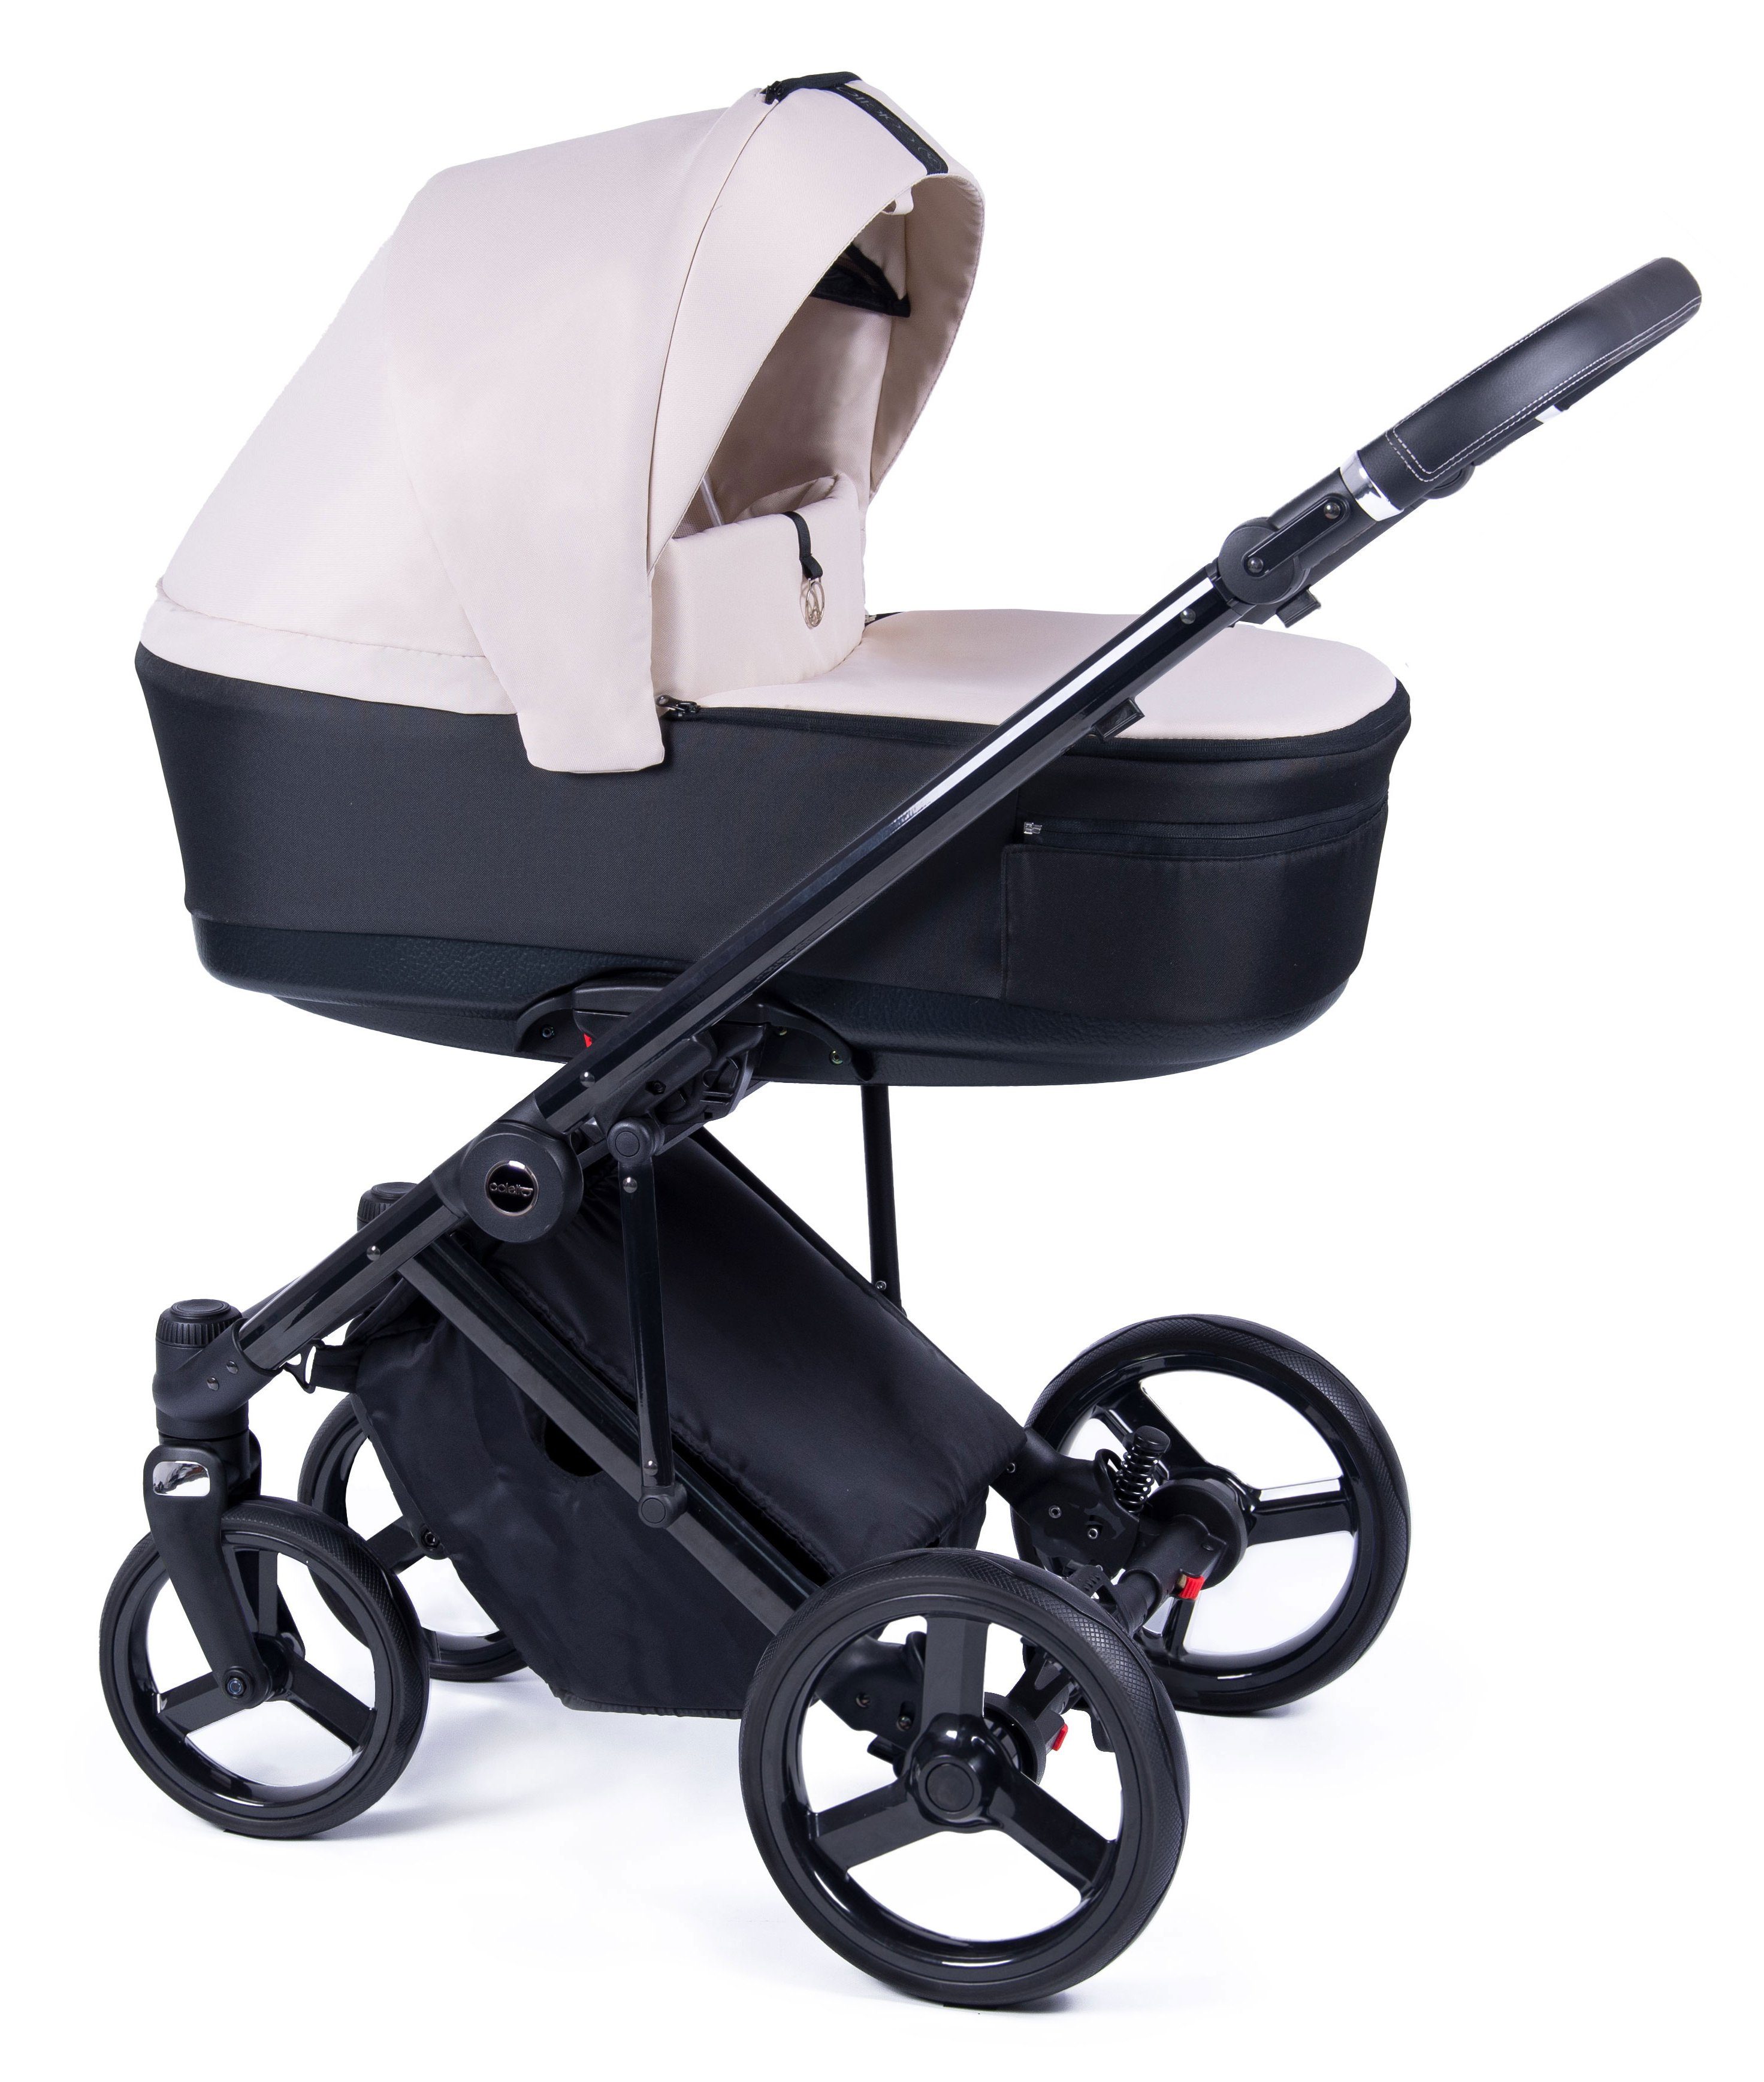 Creme - in Fado Designs 15 babies-on-wheels 1 3 = Kinderwagen-Set schwarz Gestell - Kombi-Kinderwagen 24 Teile in